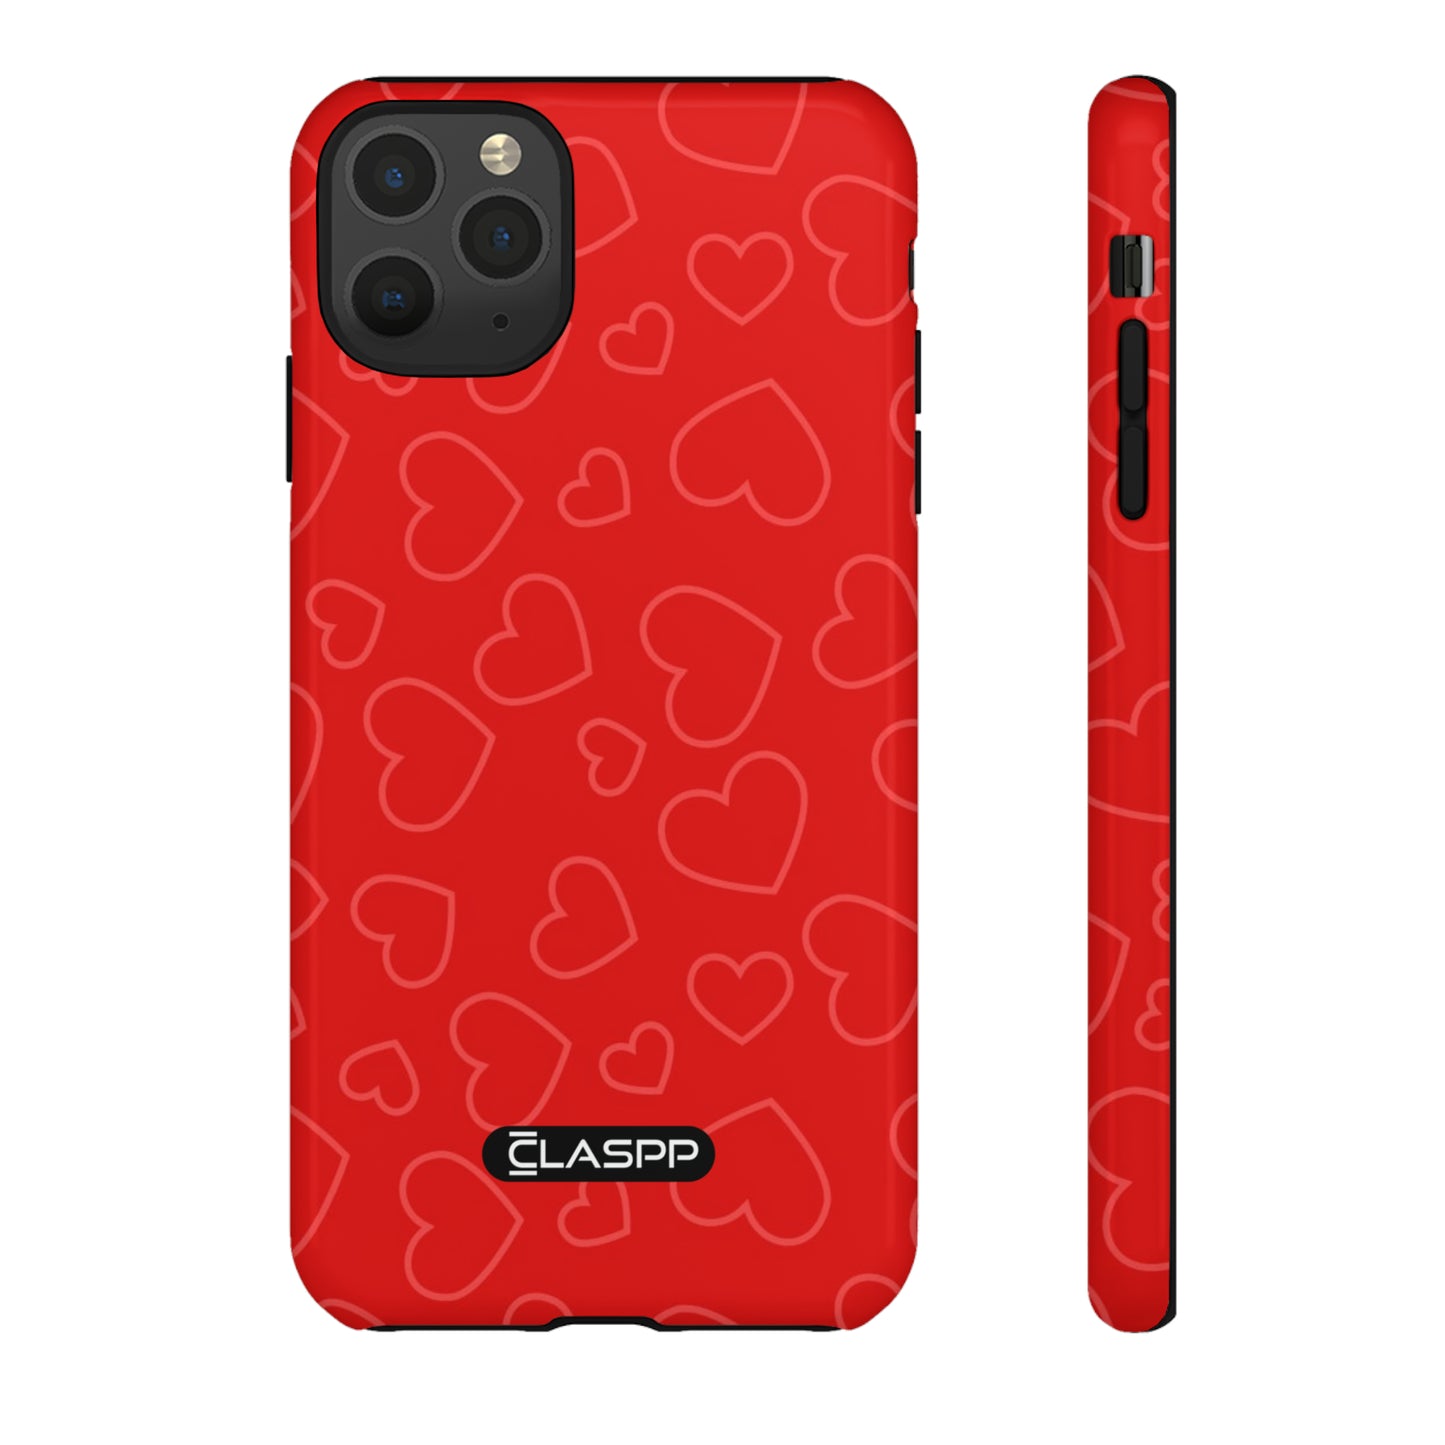 Iphone 11 pro max Amora Valentine's Day phone case